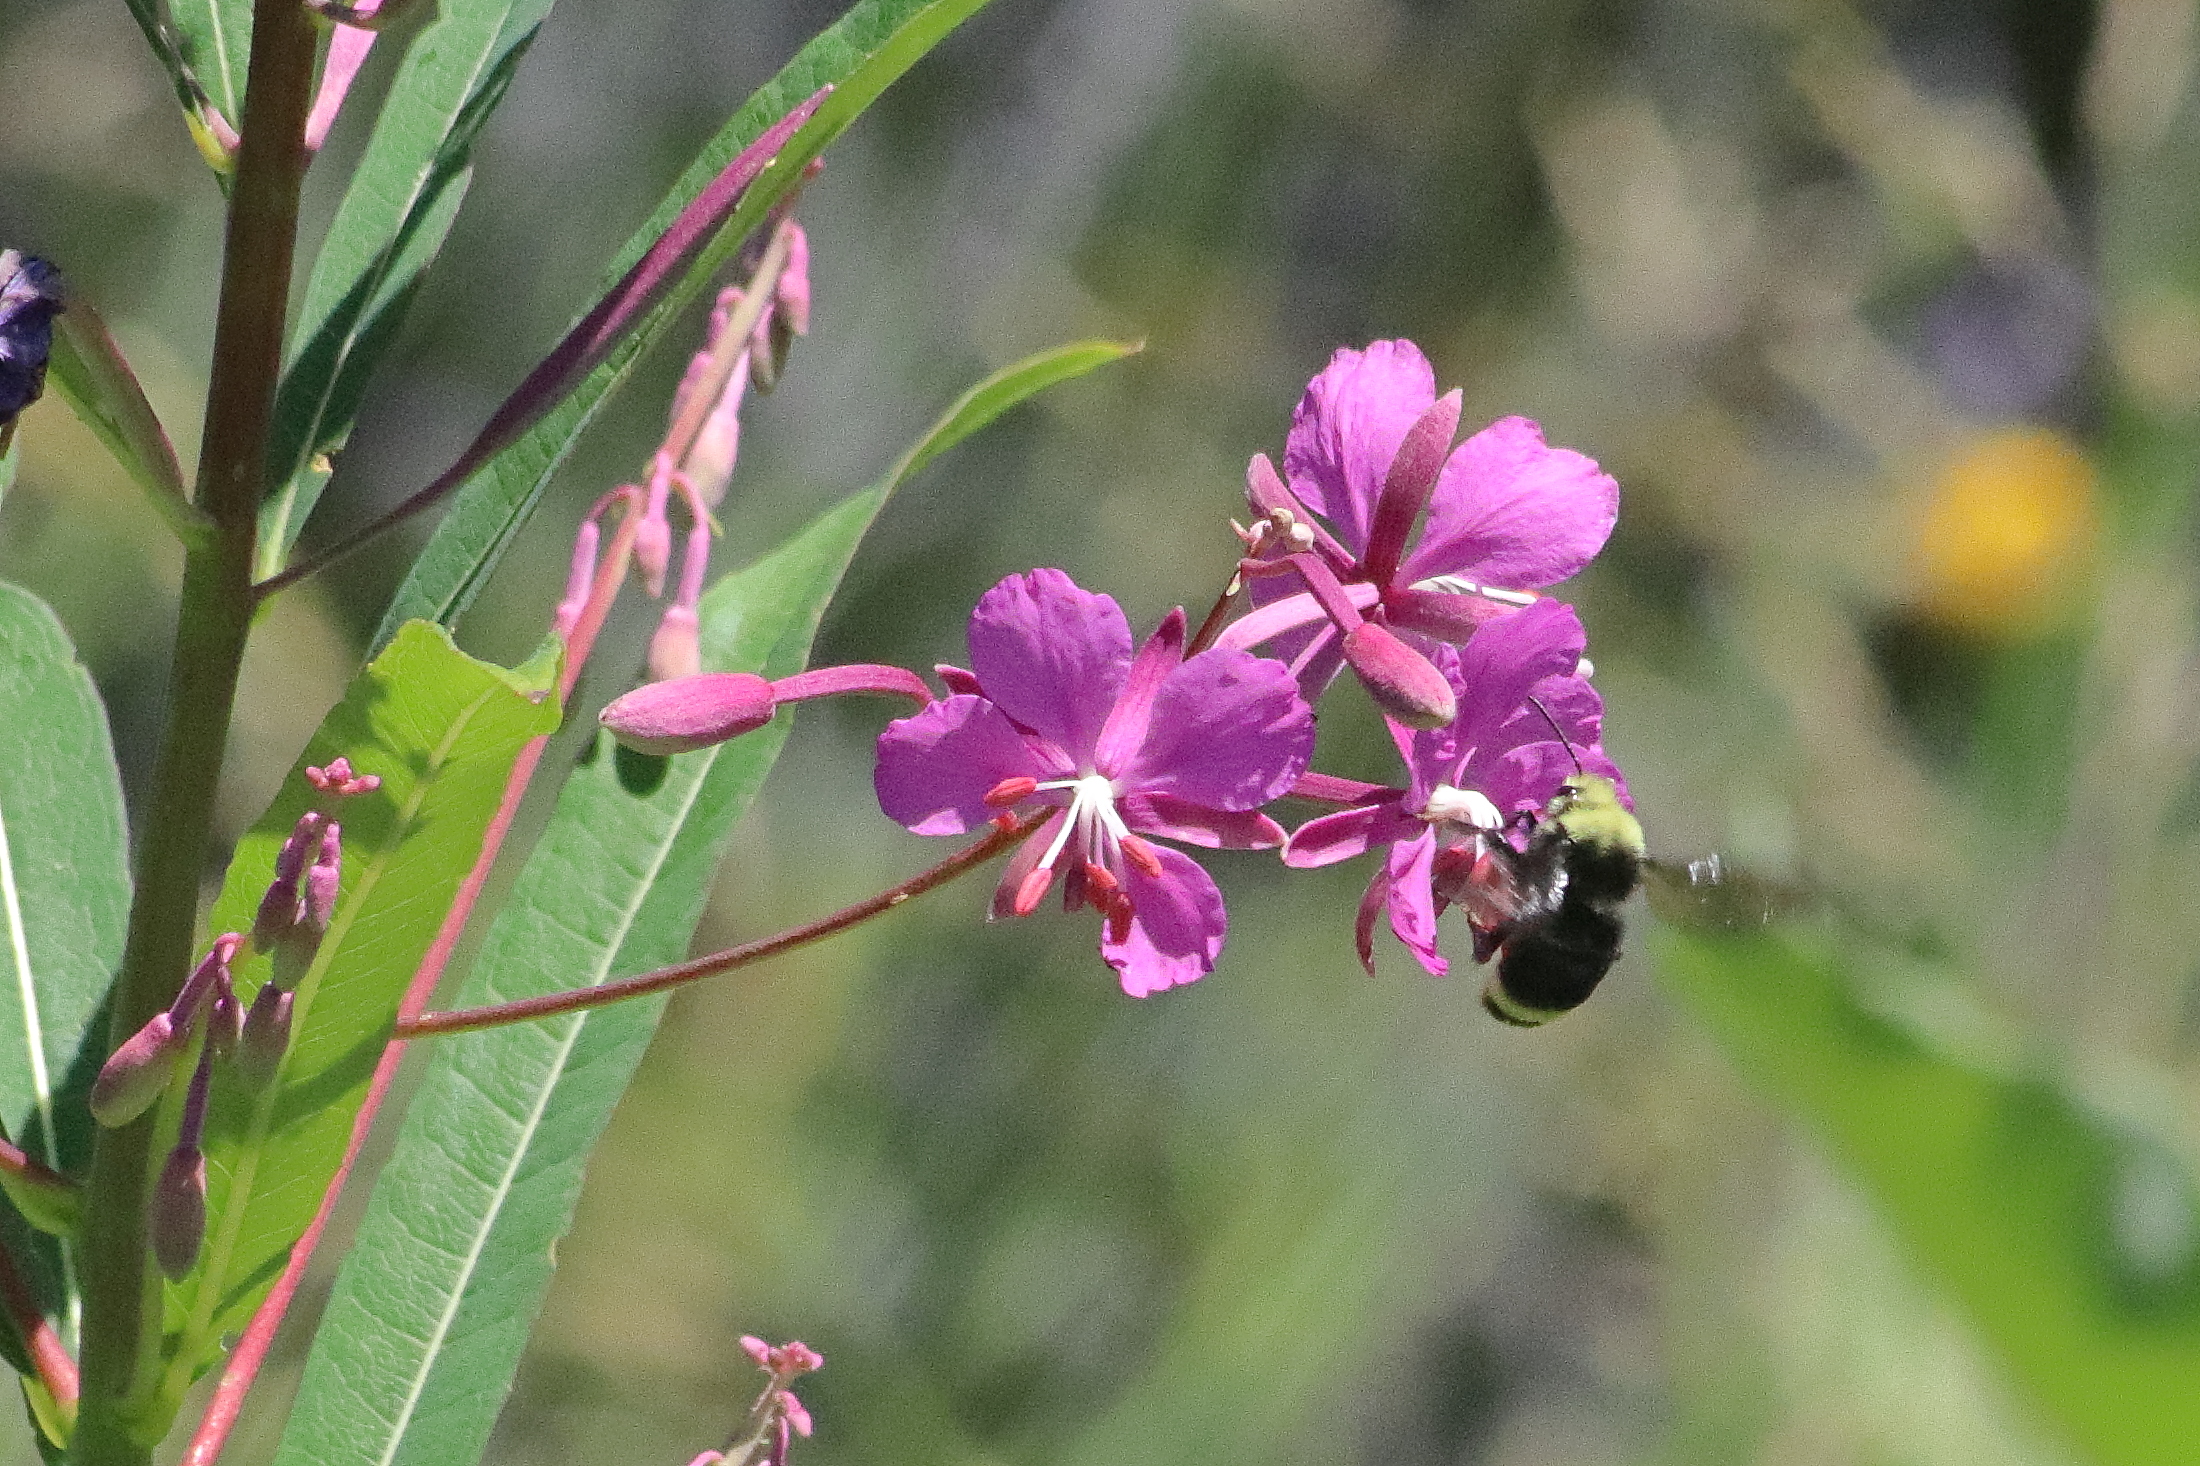 bumblebee pollinating fireweed flowers